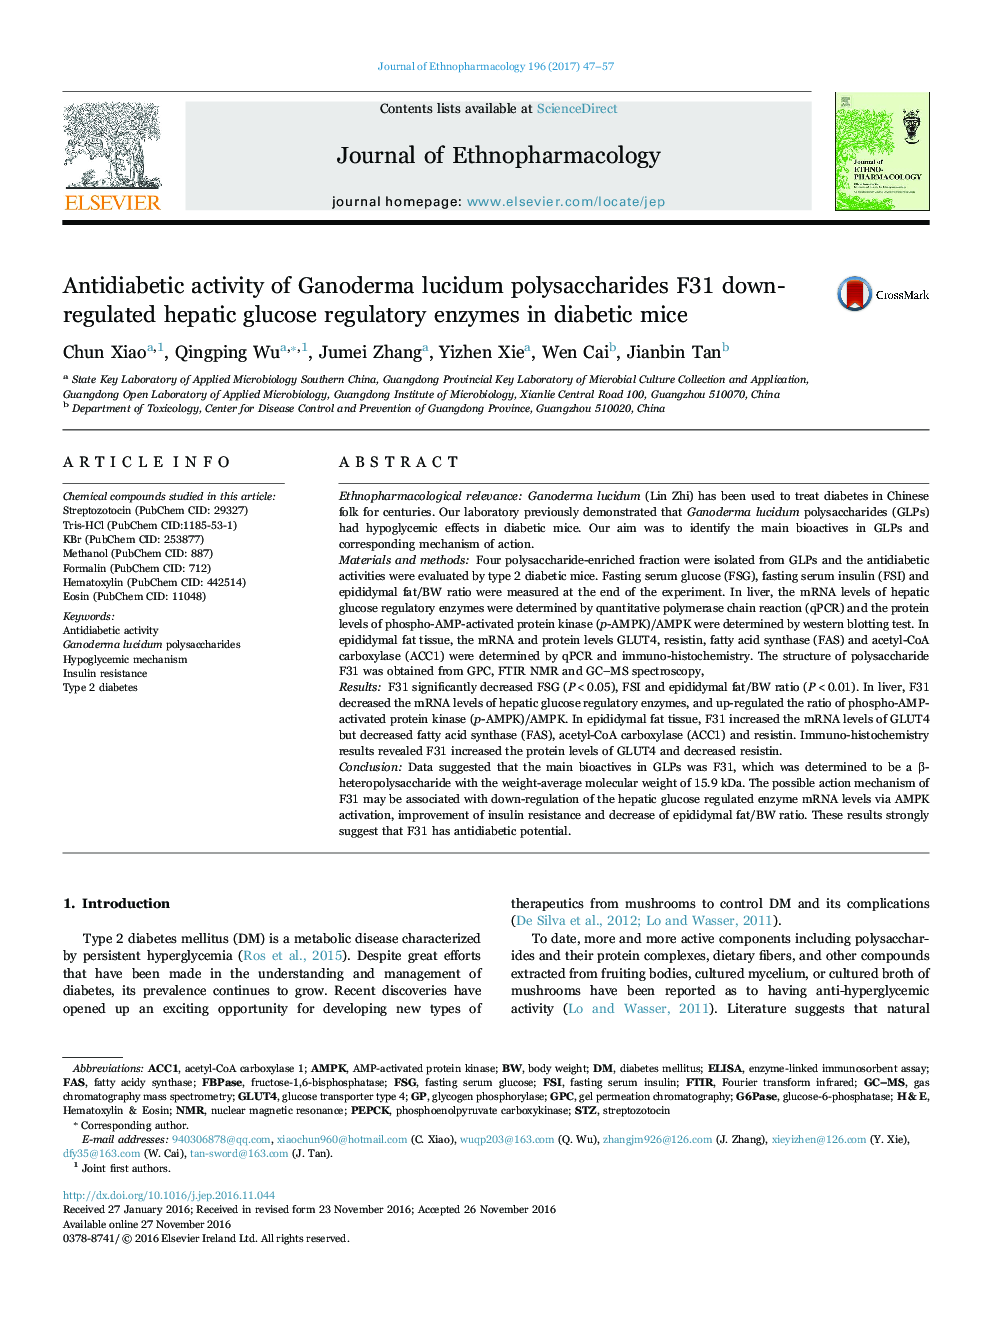 Antidiabetic activity of Ganoderma lucidum polysaccharides F31 down-regulated hepatic glucose regulatory enzymes in diabetic mice